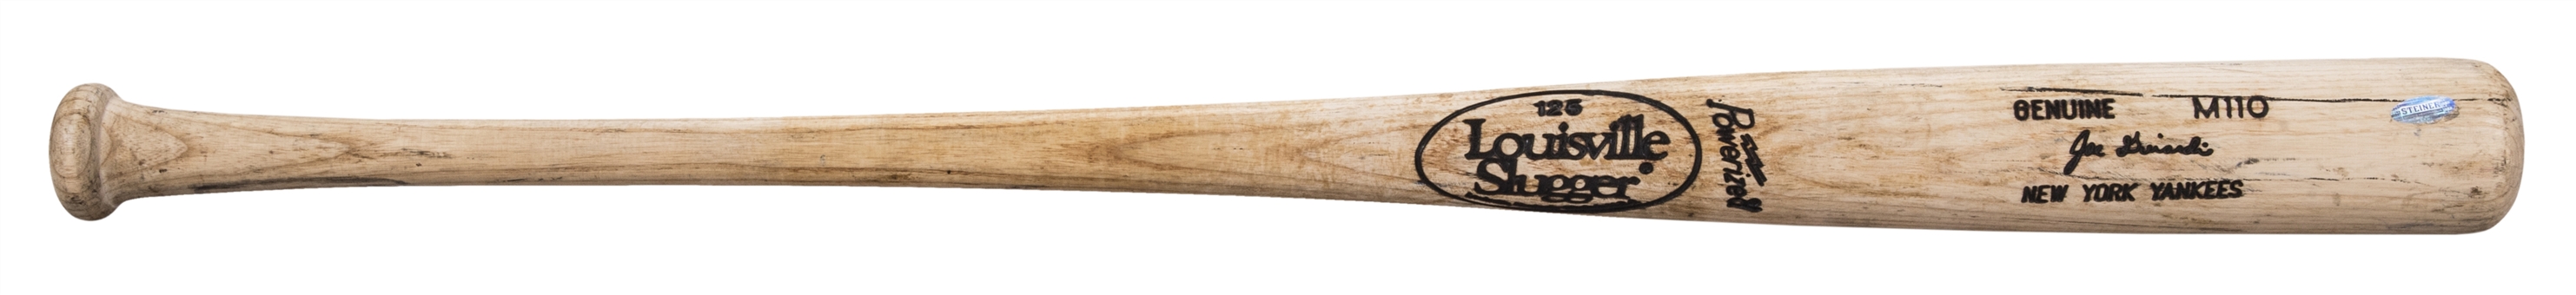 Joe Girardi Game Used Louisville Slugger M110 Model Bat (Steiner)